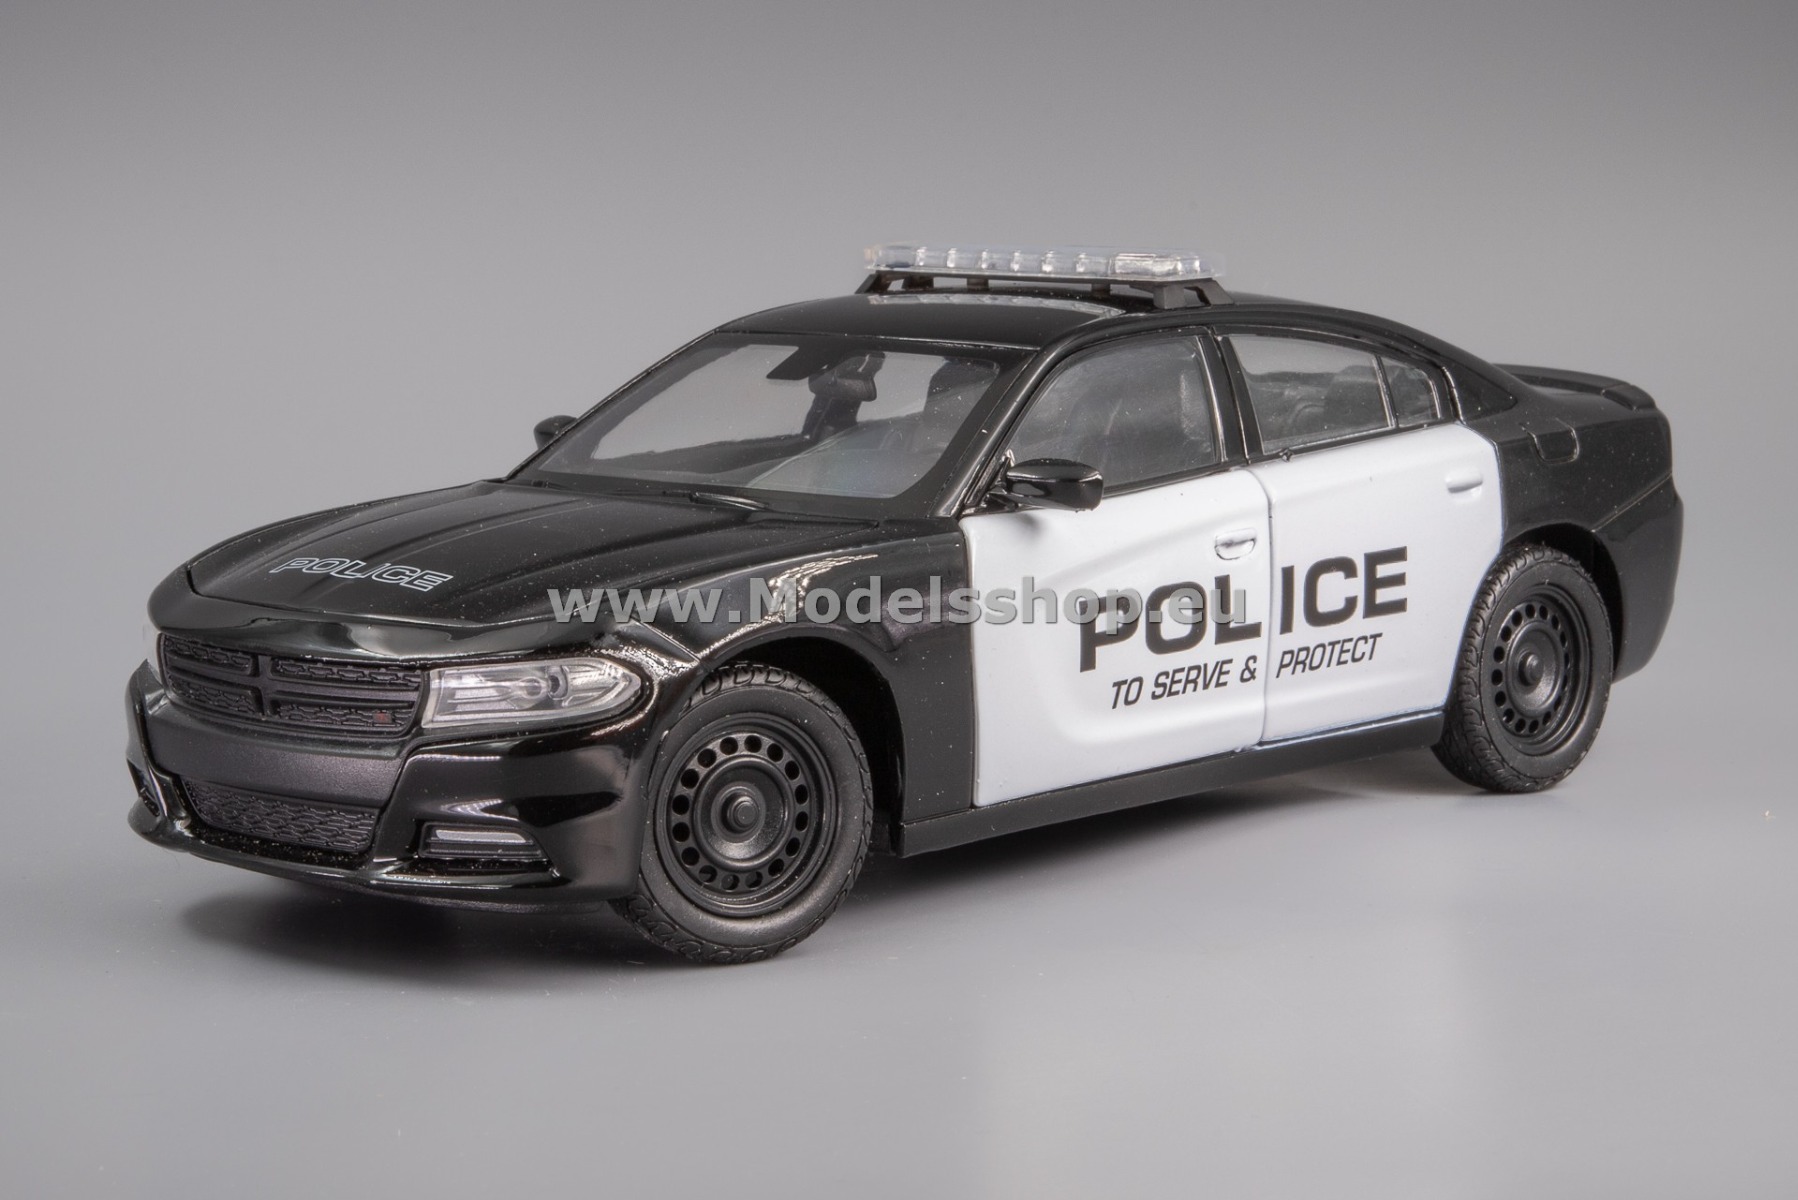 Dodge Charger Pursuit, 2016, police car